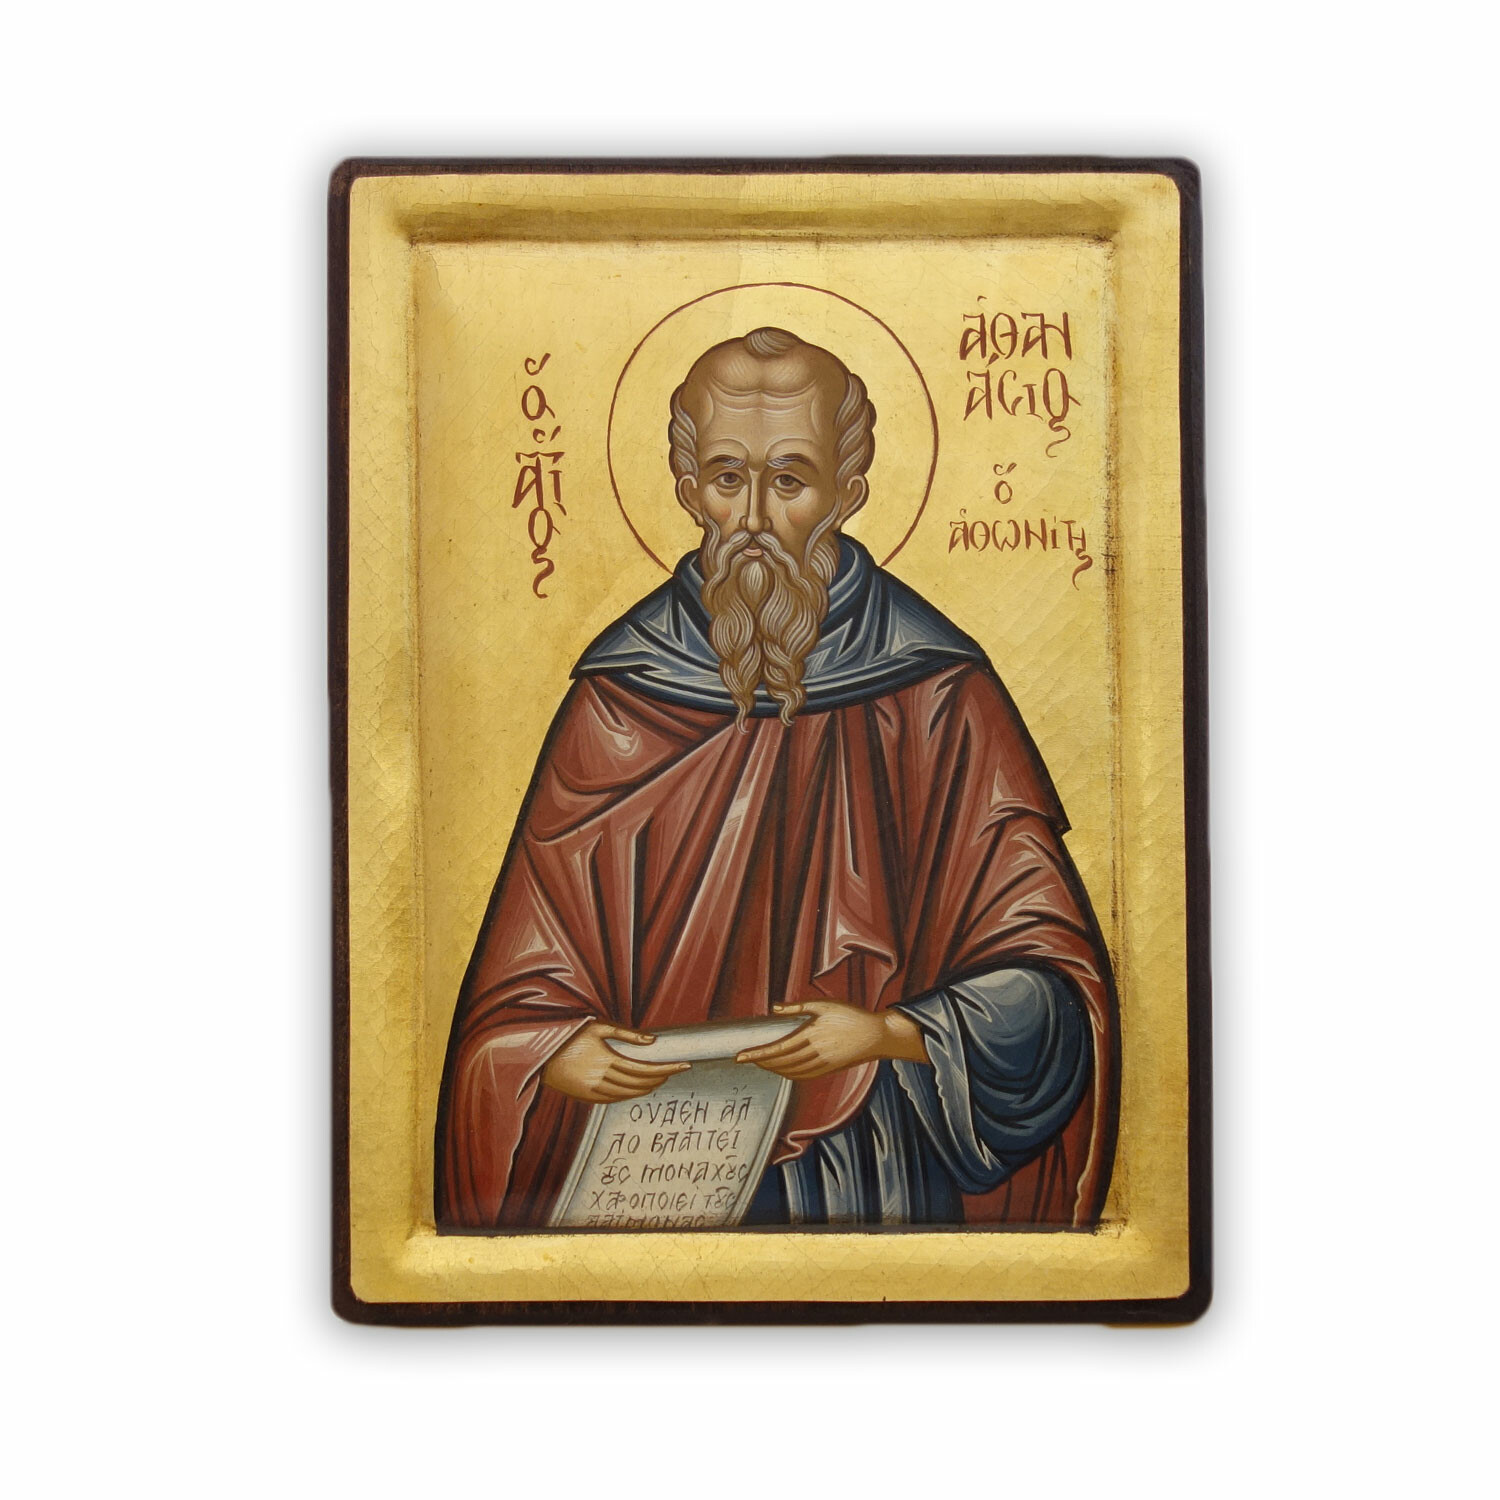 Athanasius the Athonite